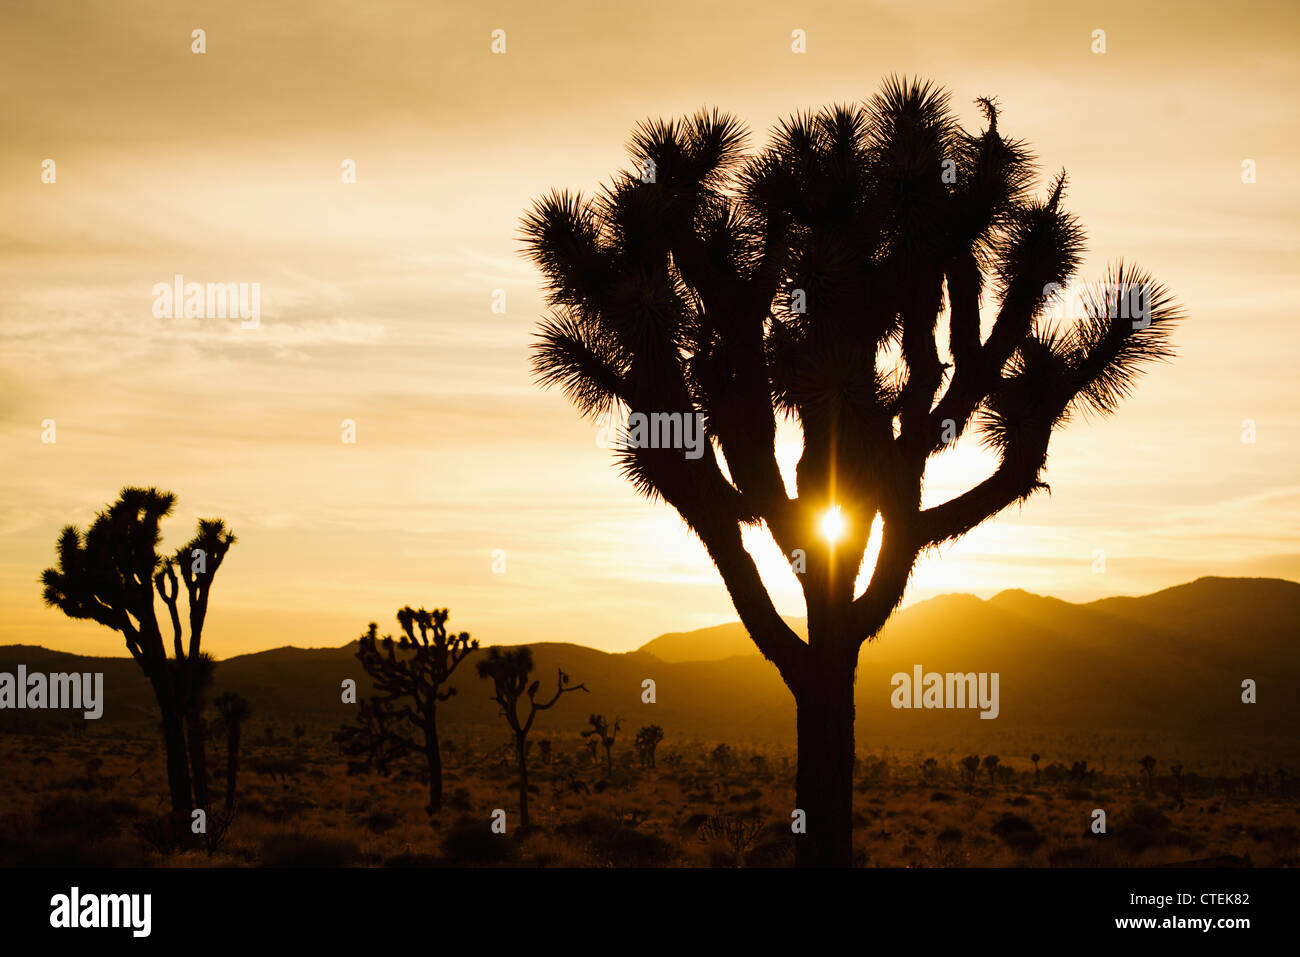 USA, California, Joshua Tree National Park, Joshua trees silhouetted at sunset Stock Photo